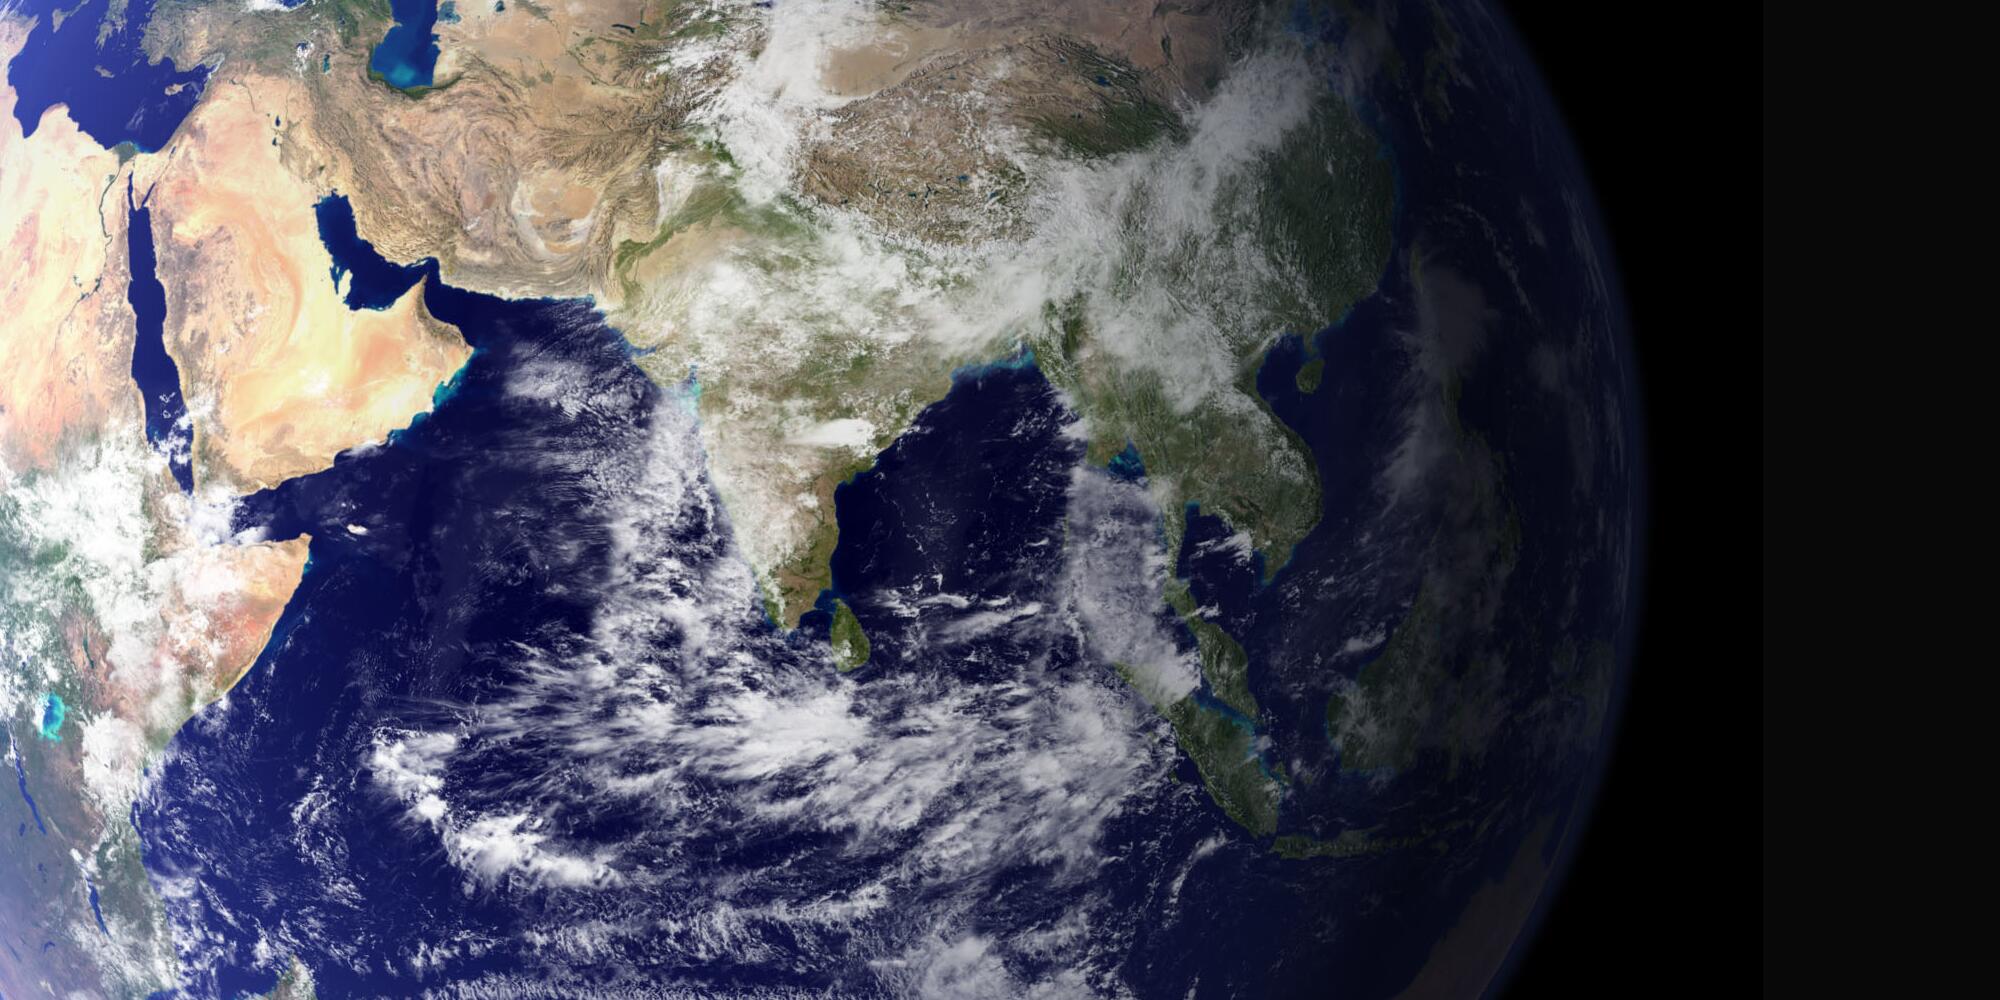 The eastern hemisphere viewed from space.